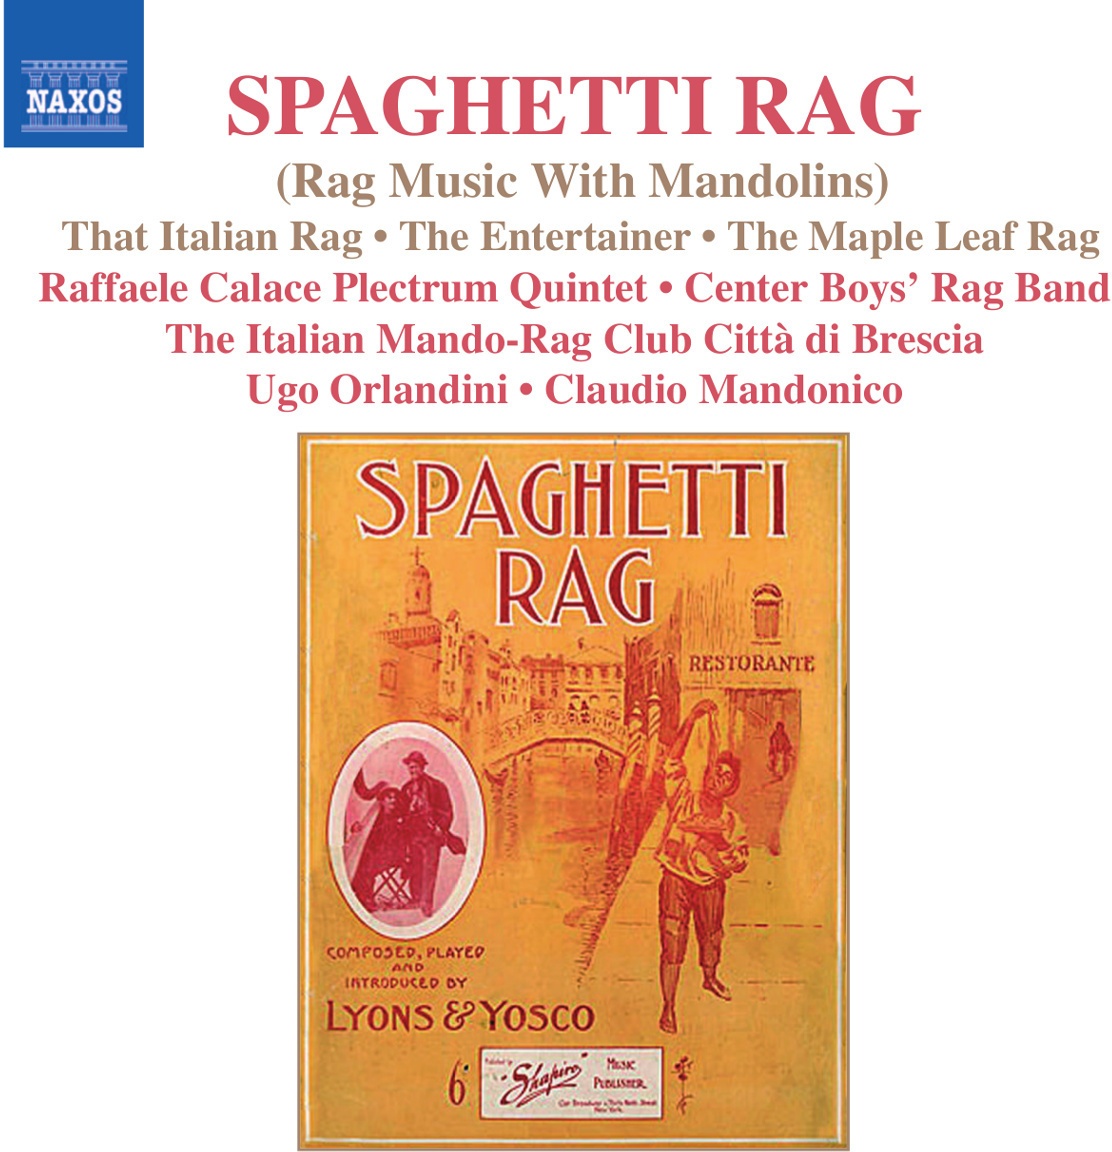 Spaghetti Rag-Rag Music With Mandolins - Italian Mando-Rag Club Brescia. (CD)